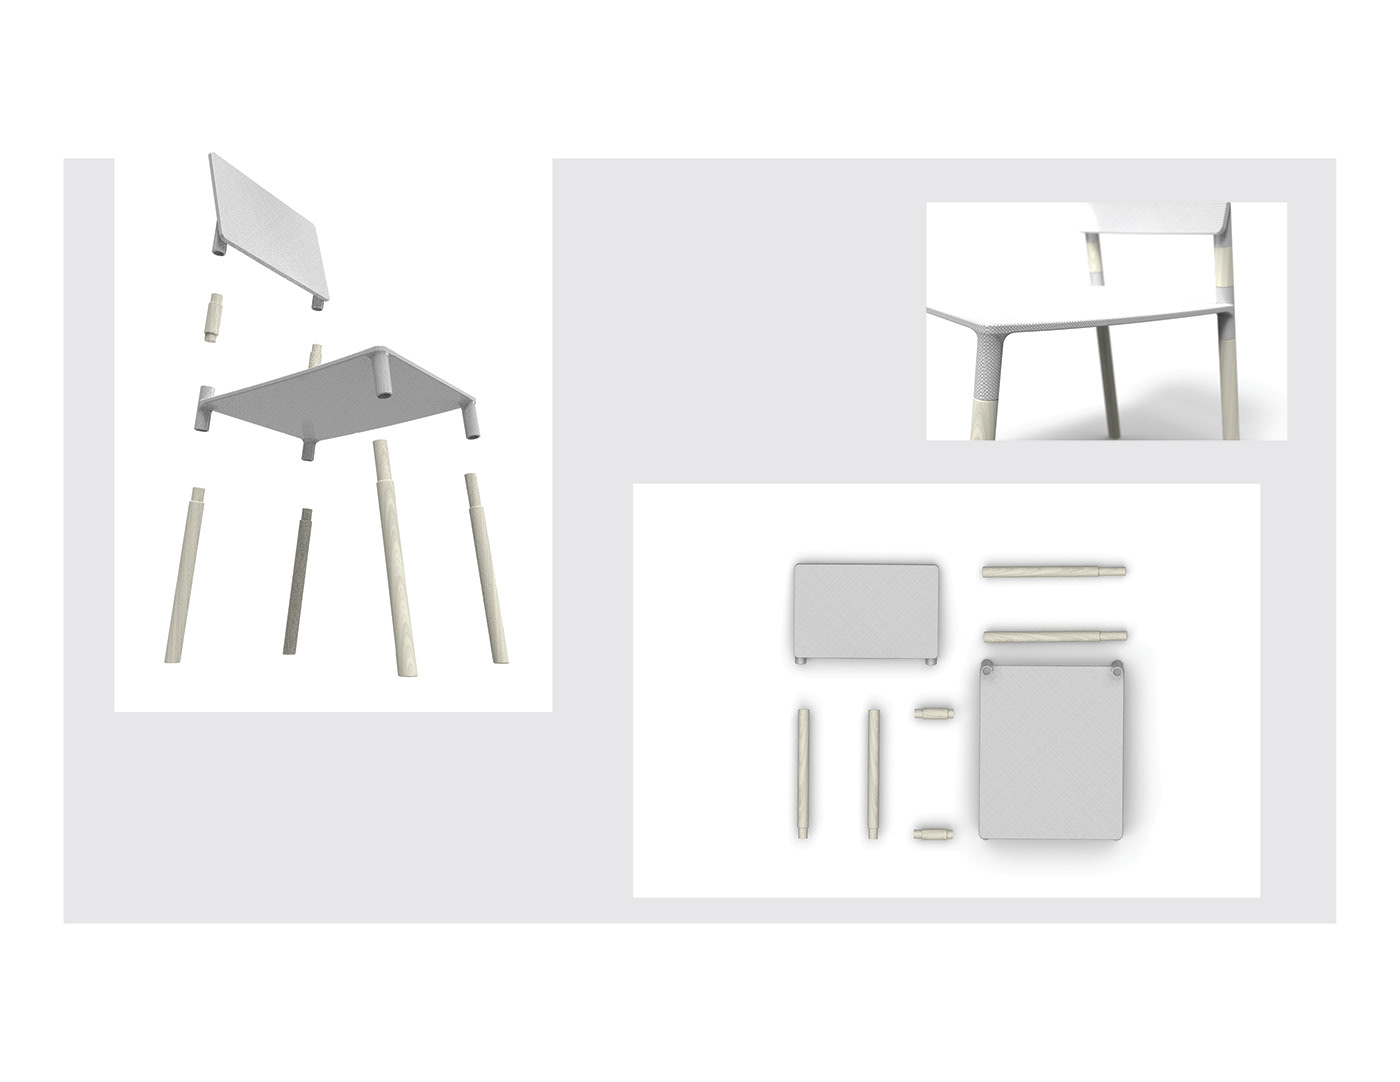 Composite Fiberglass furniture furniture design  chair composites Analysis